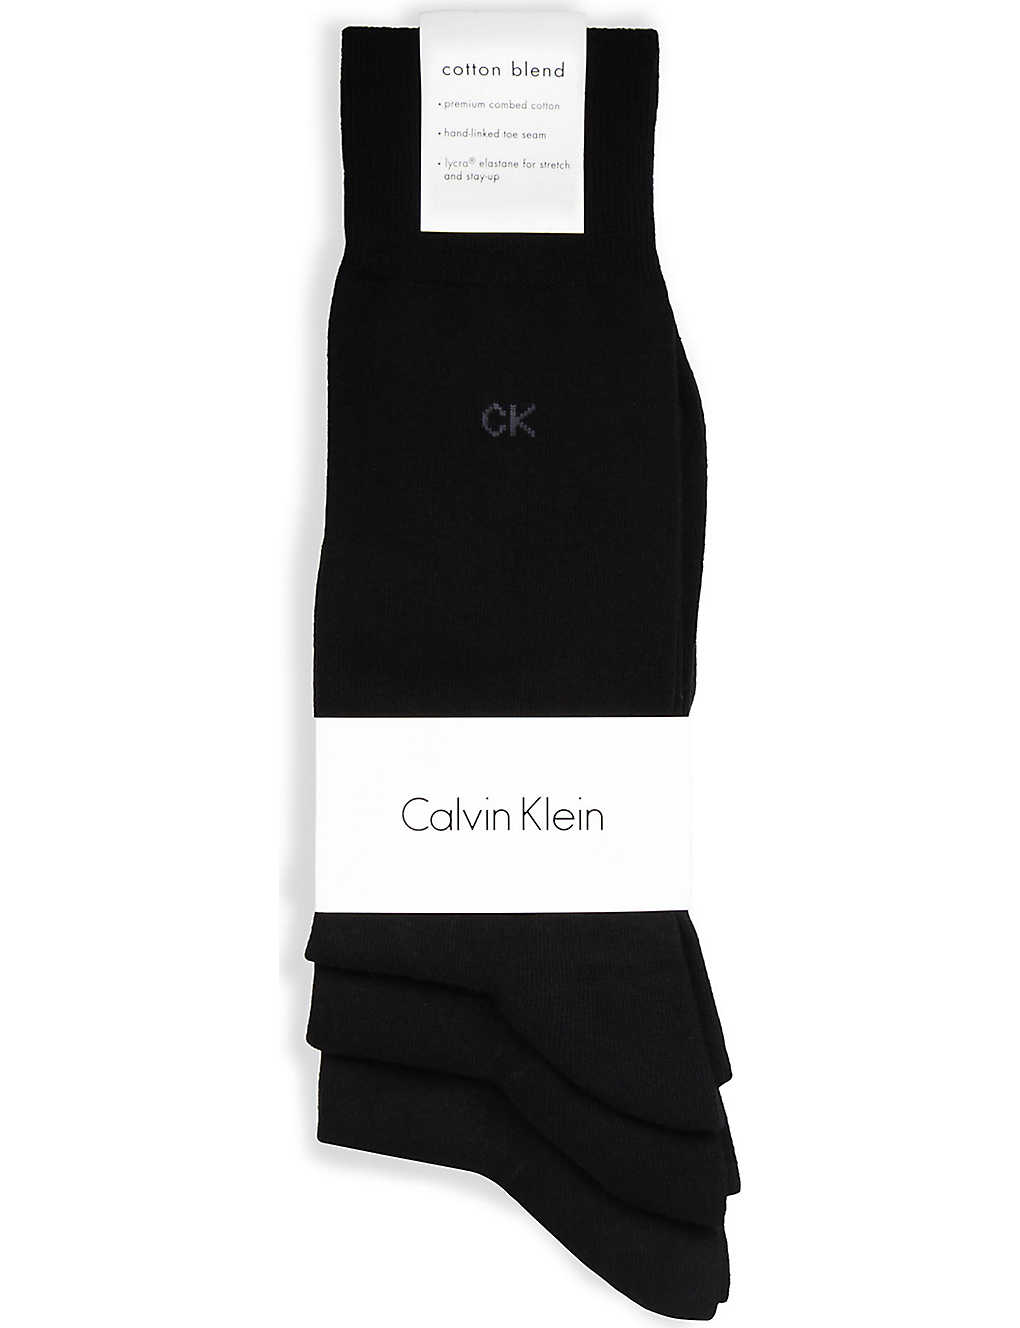 CALVIN KLEIN - Pack of three flat-knit socks | Selfridges.com